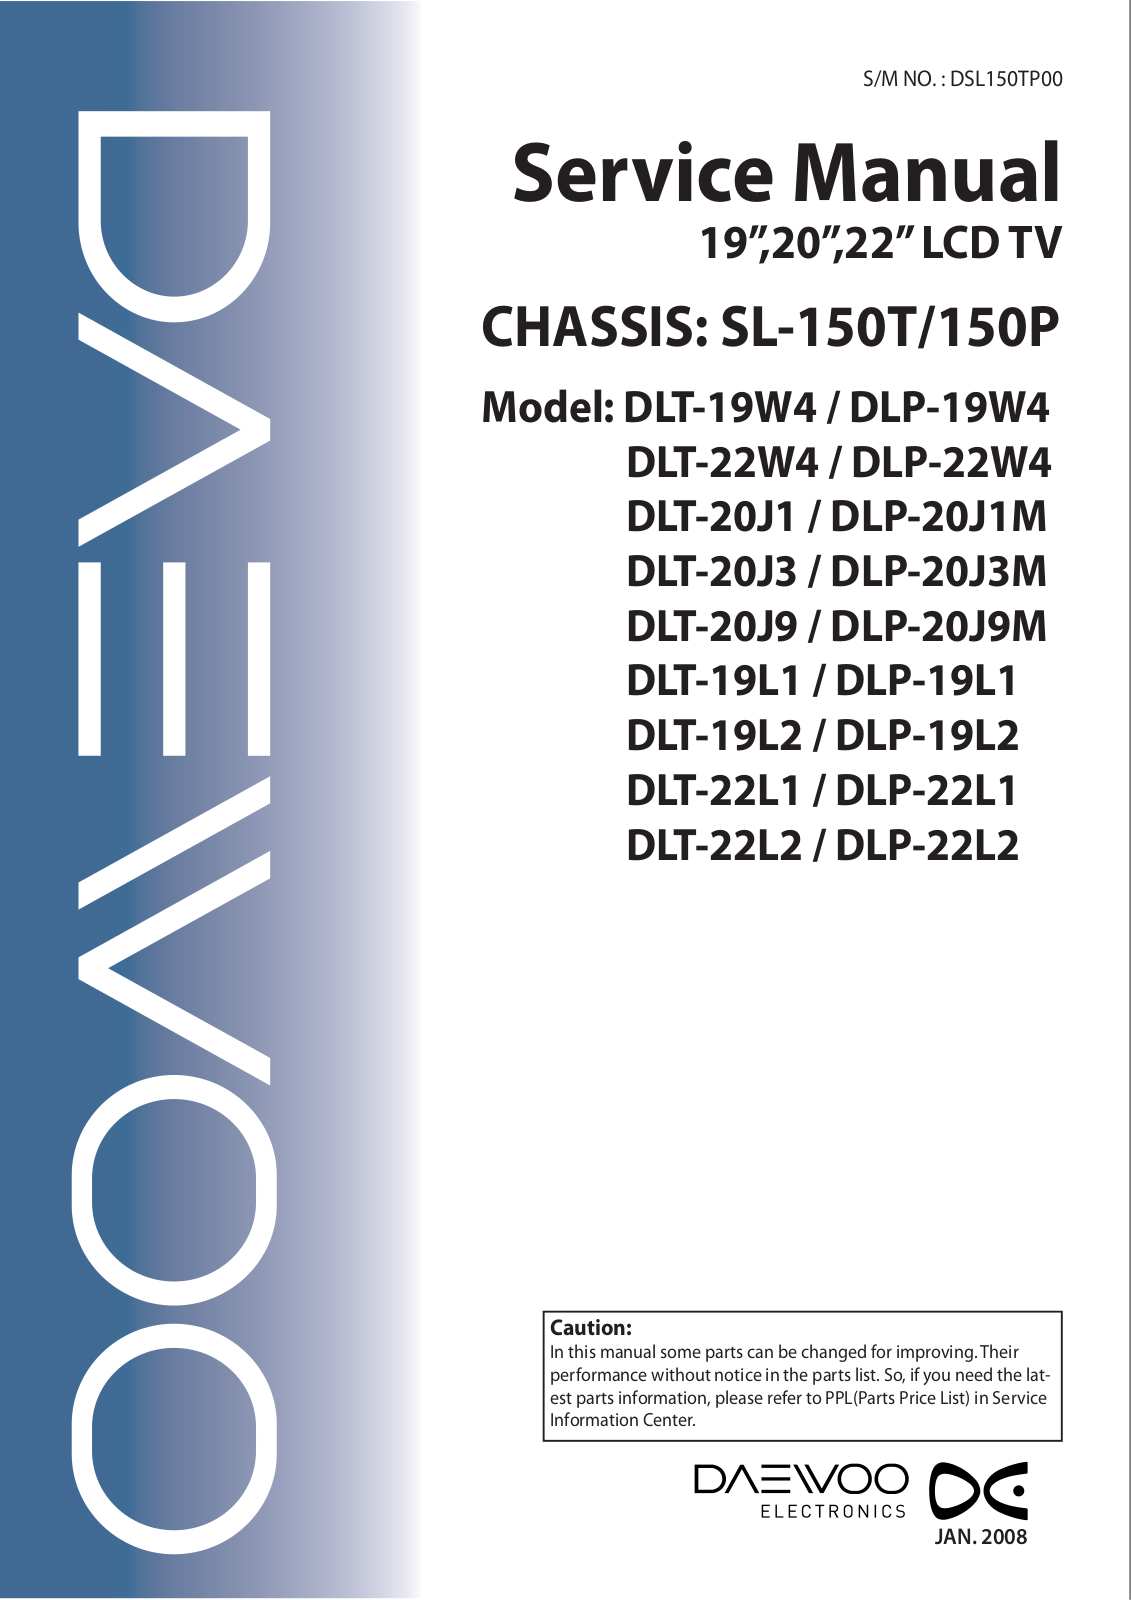 DAEWOO DLT-19L2 User Manual